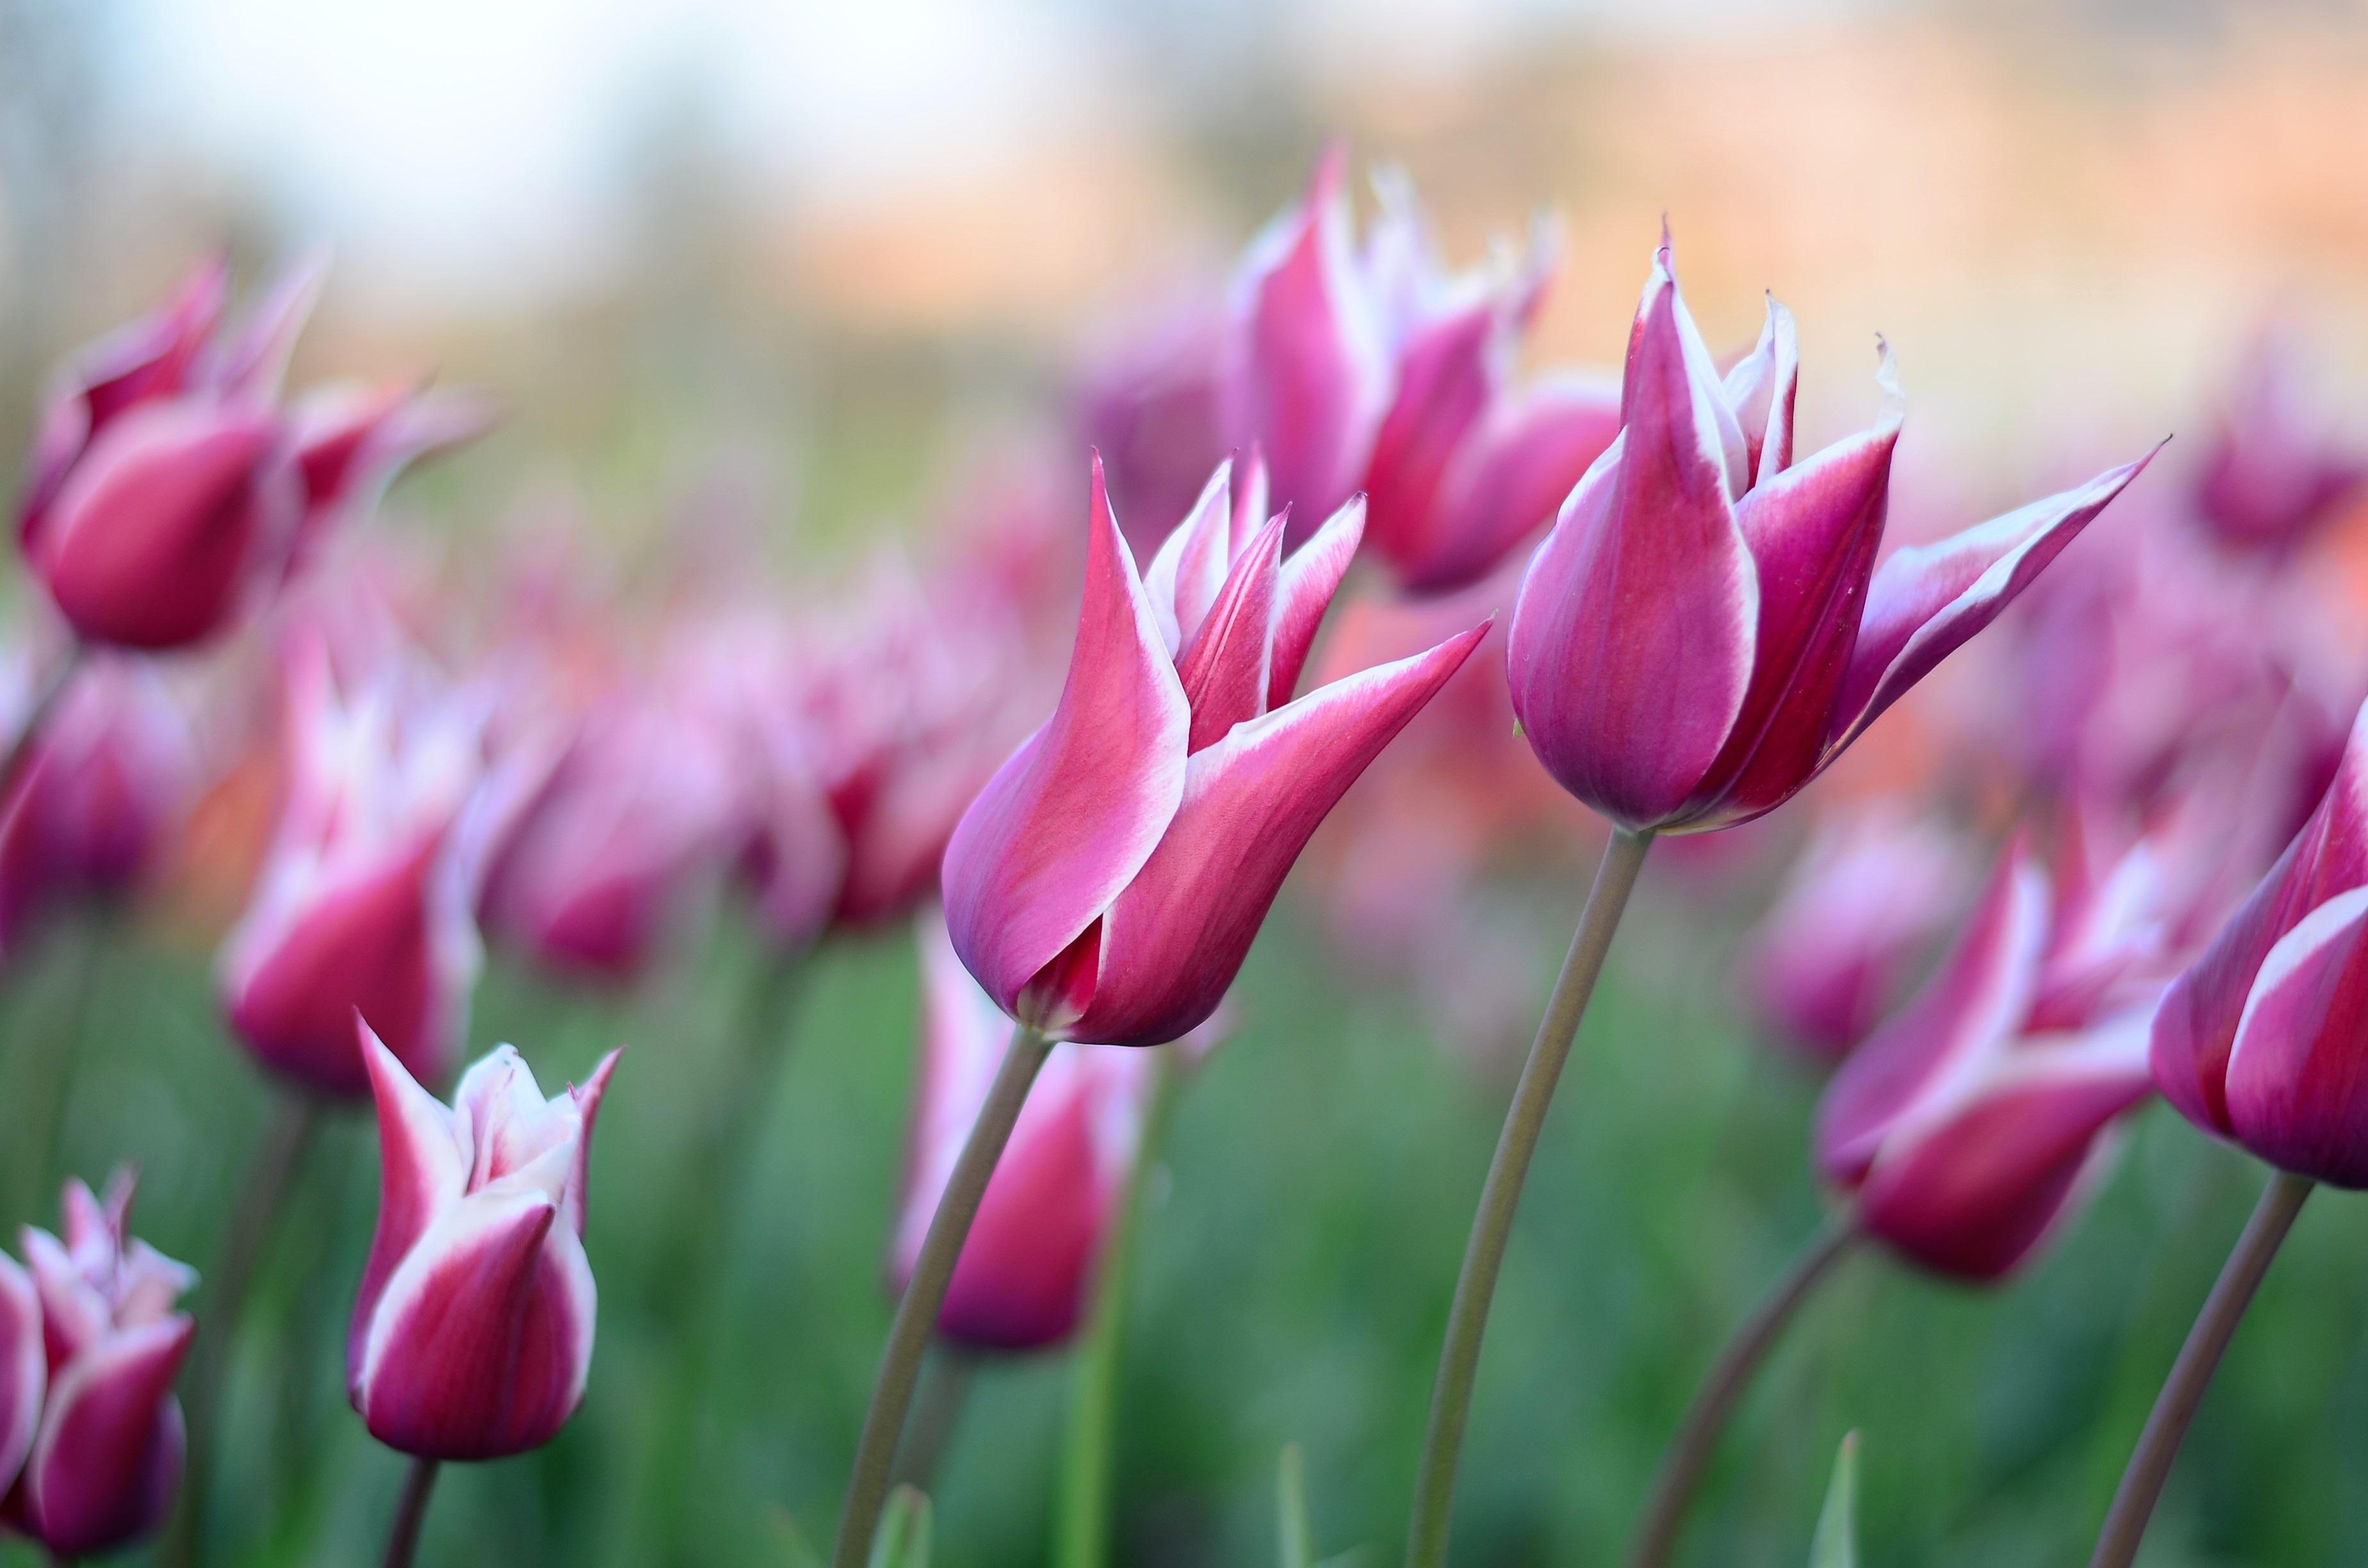 Tulip Lily Flowering 'Claudia' - Tulip from Leo Berbee Bulb Company